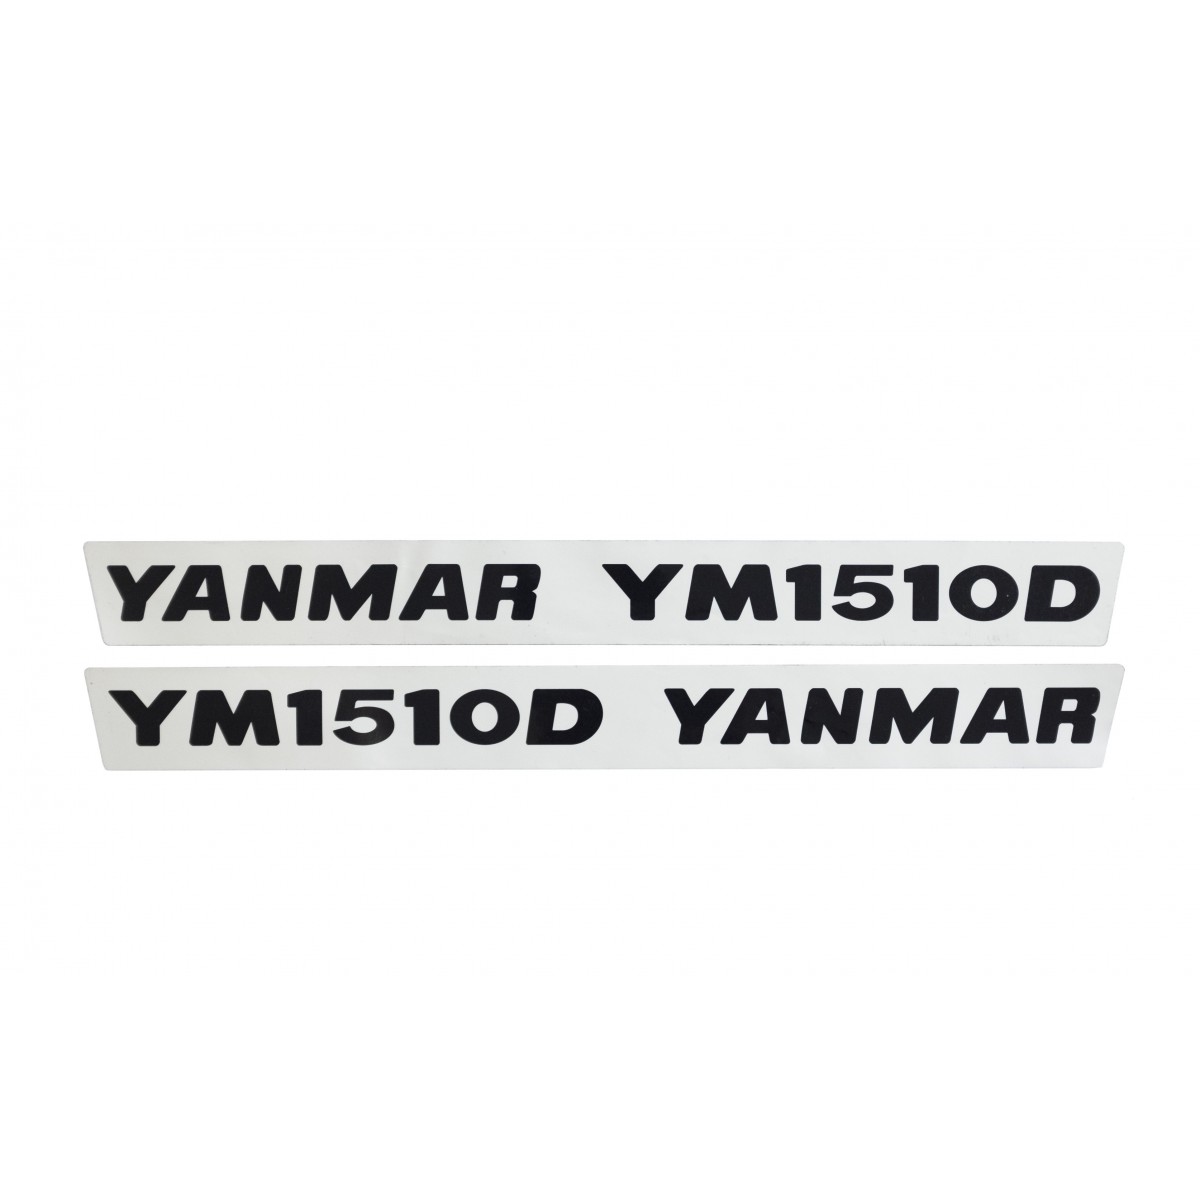 Autocollants Yanmar YM1510D